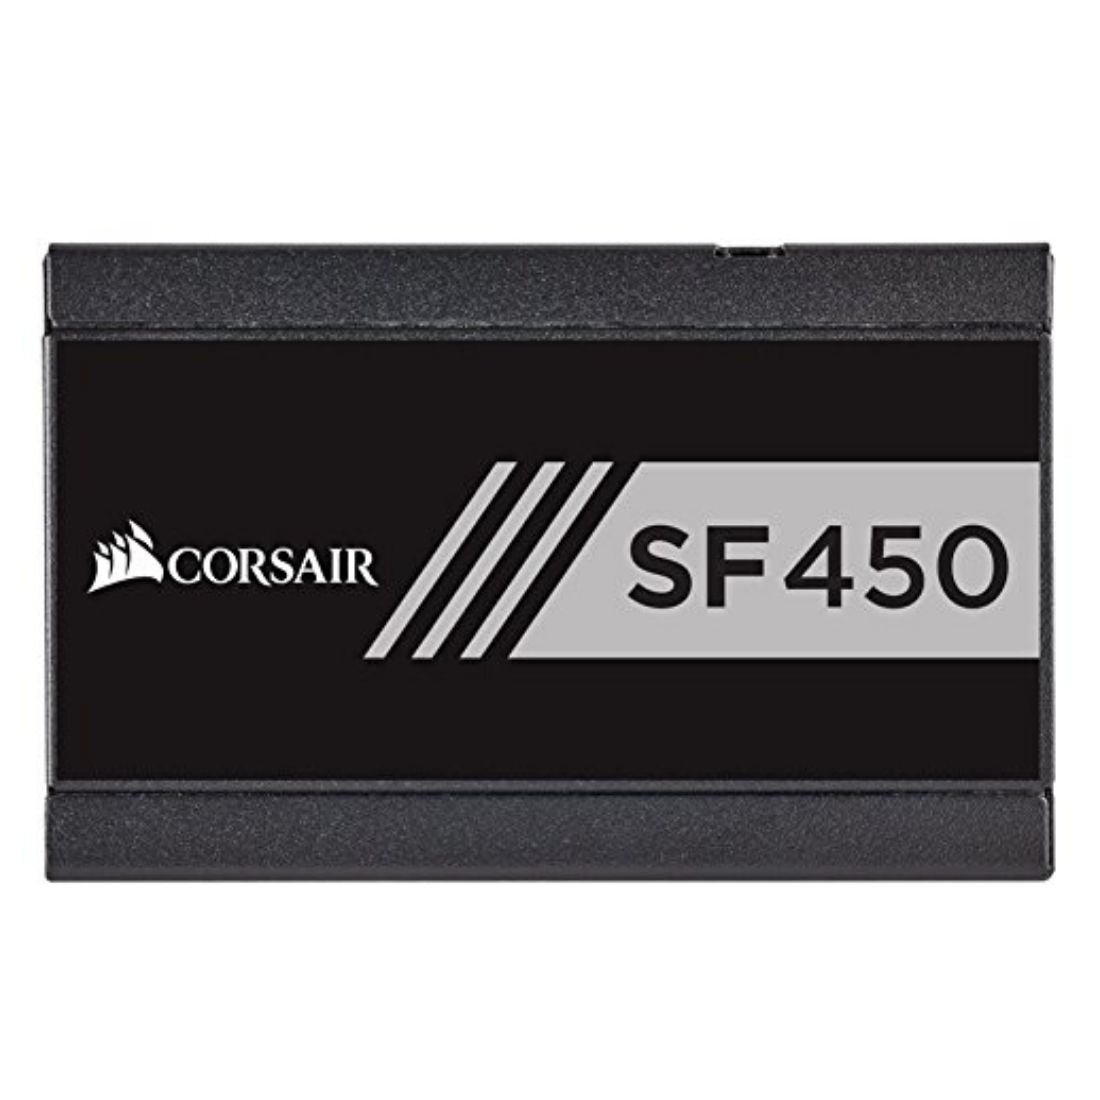 Corsair SF450 450-वॉट 80 प्लस गोल्ड सर्टिफाइड पावर सप्लाई